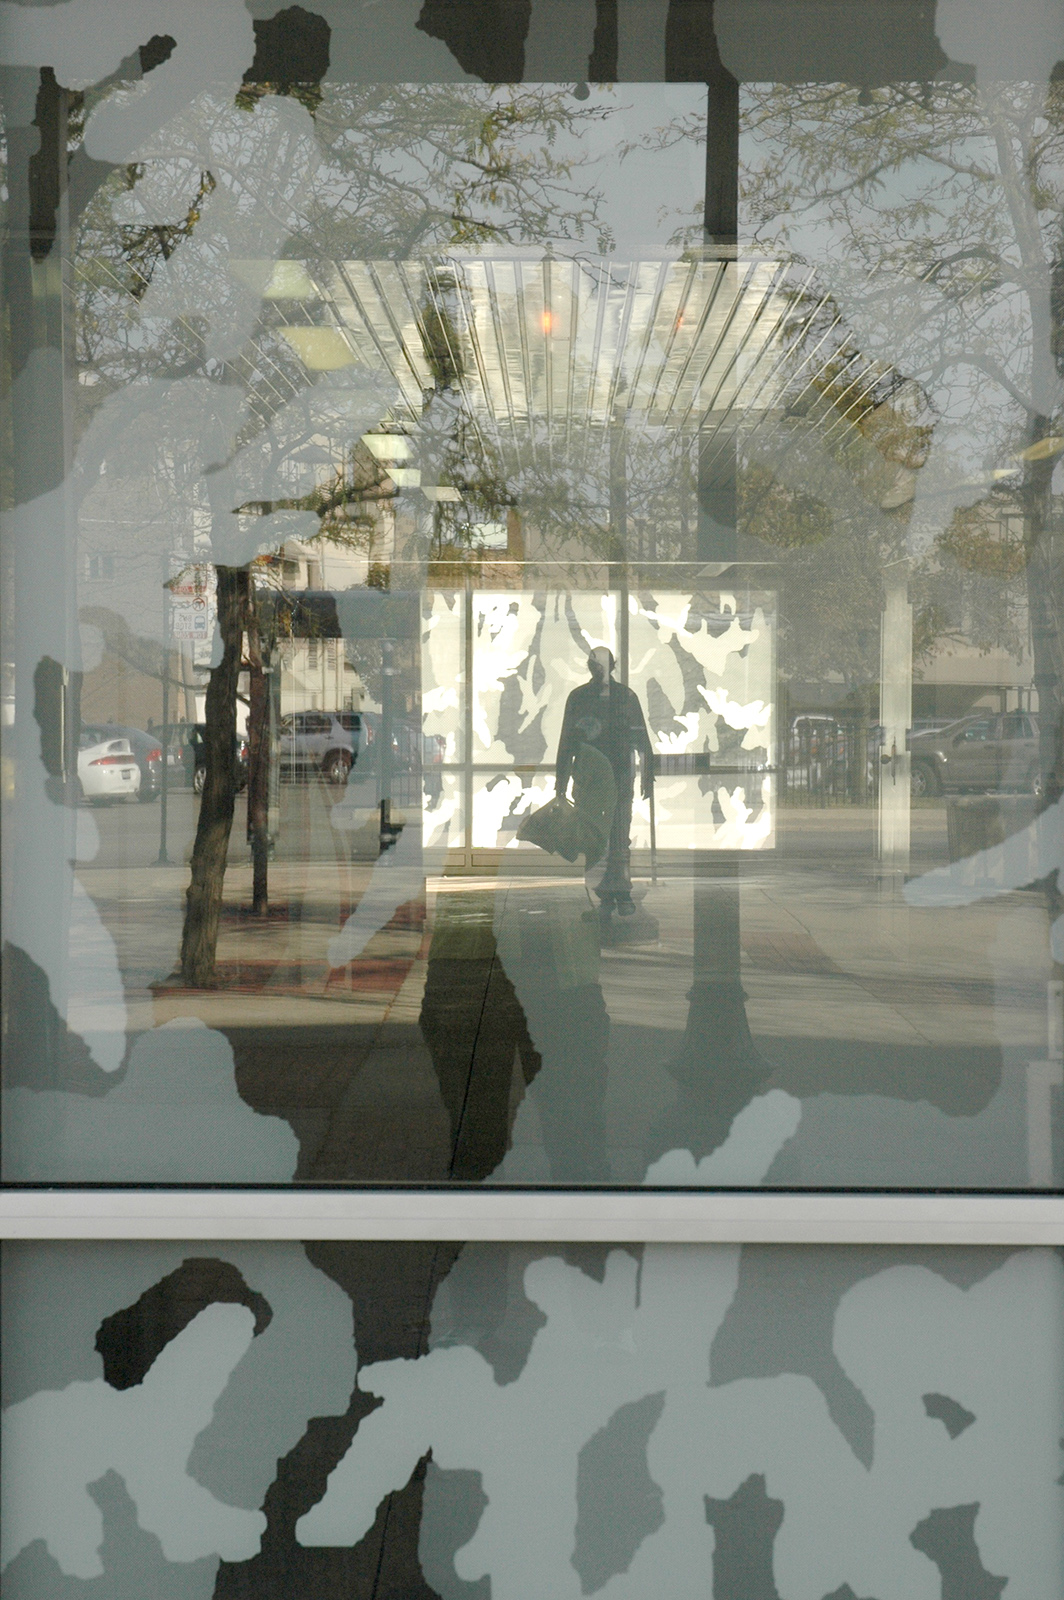  Shadow Screens: exterior and interior views 2007 